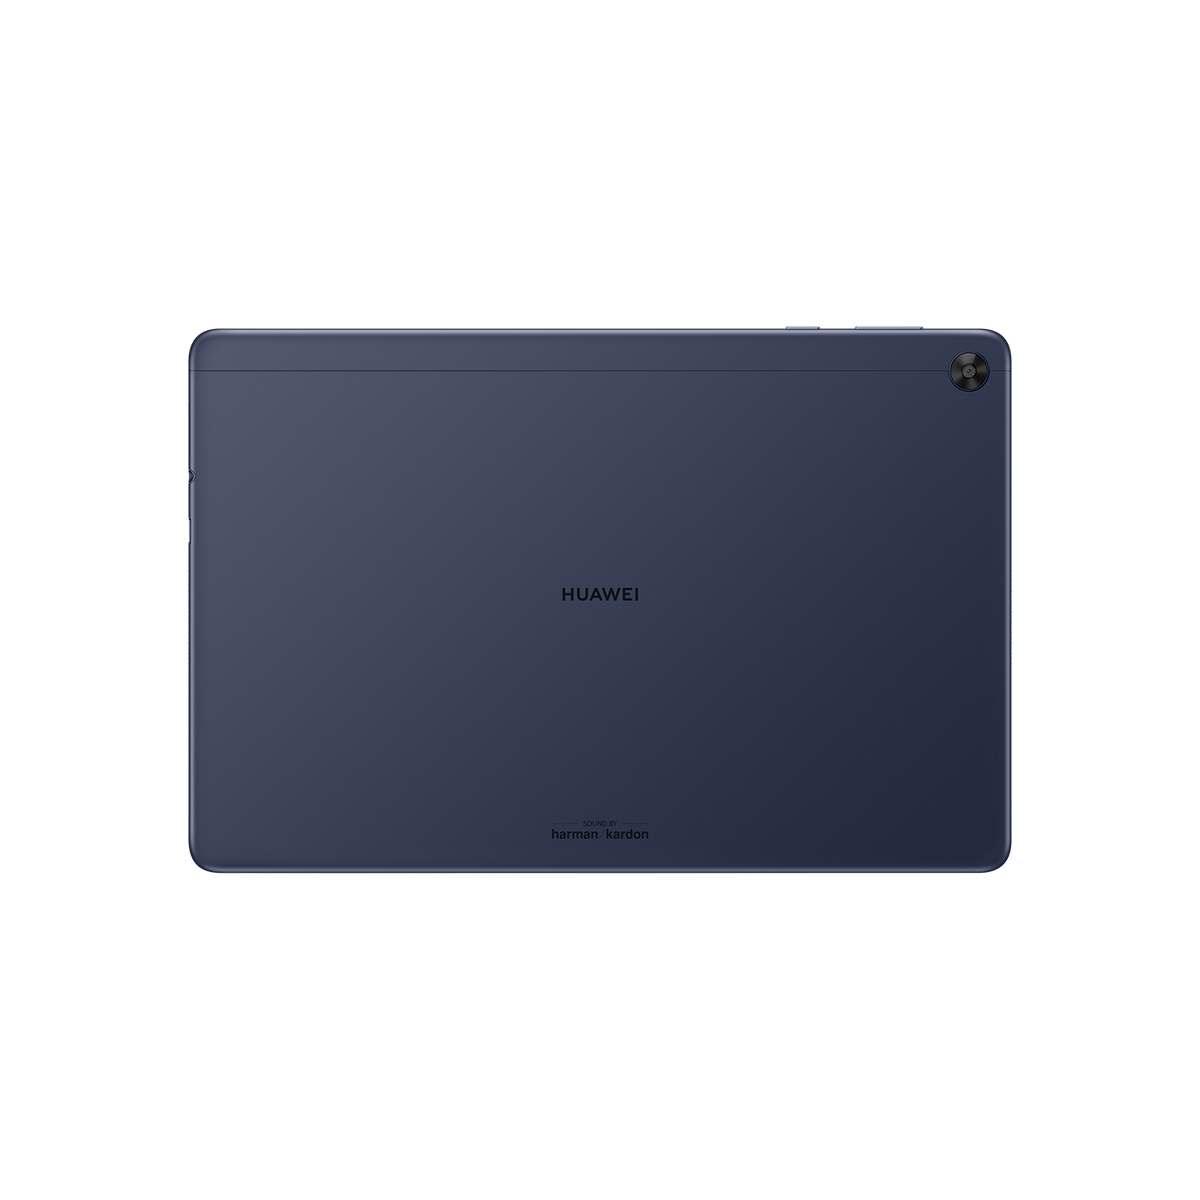 Blue WIFI Zoll, MATEPAD GB, 2+32GB, Deepsea HUAWEI T 10S 32 10,1 Tablet,